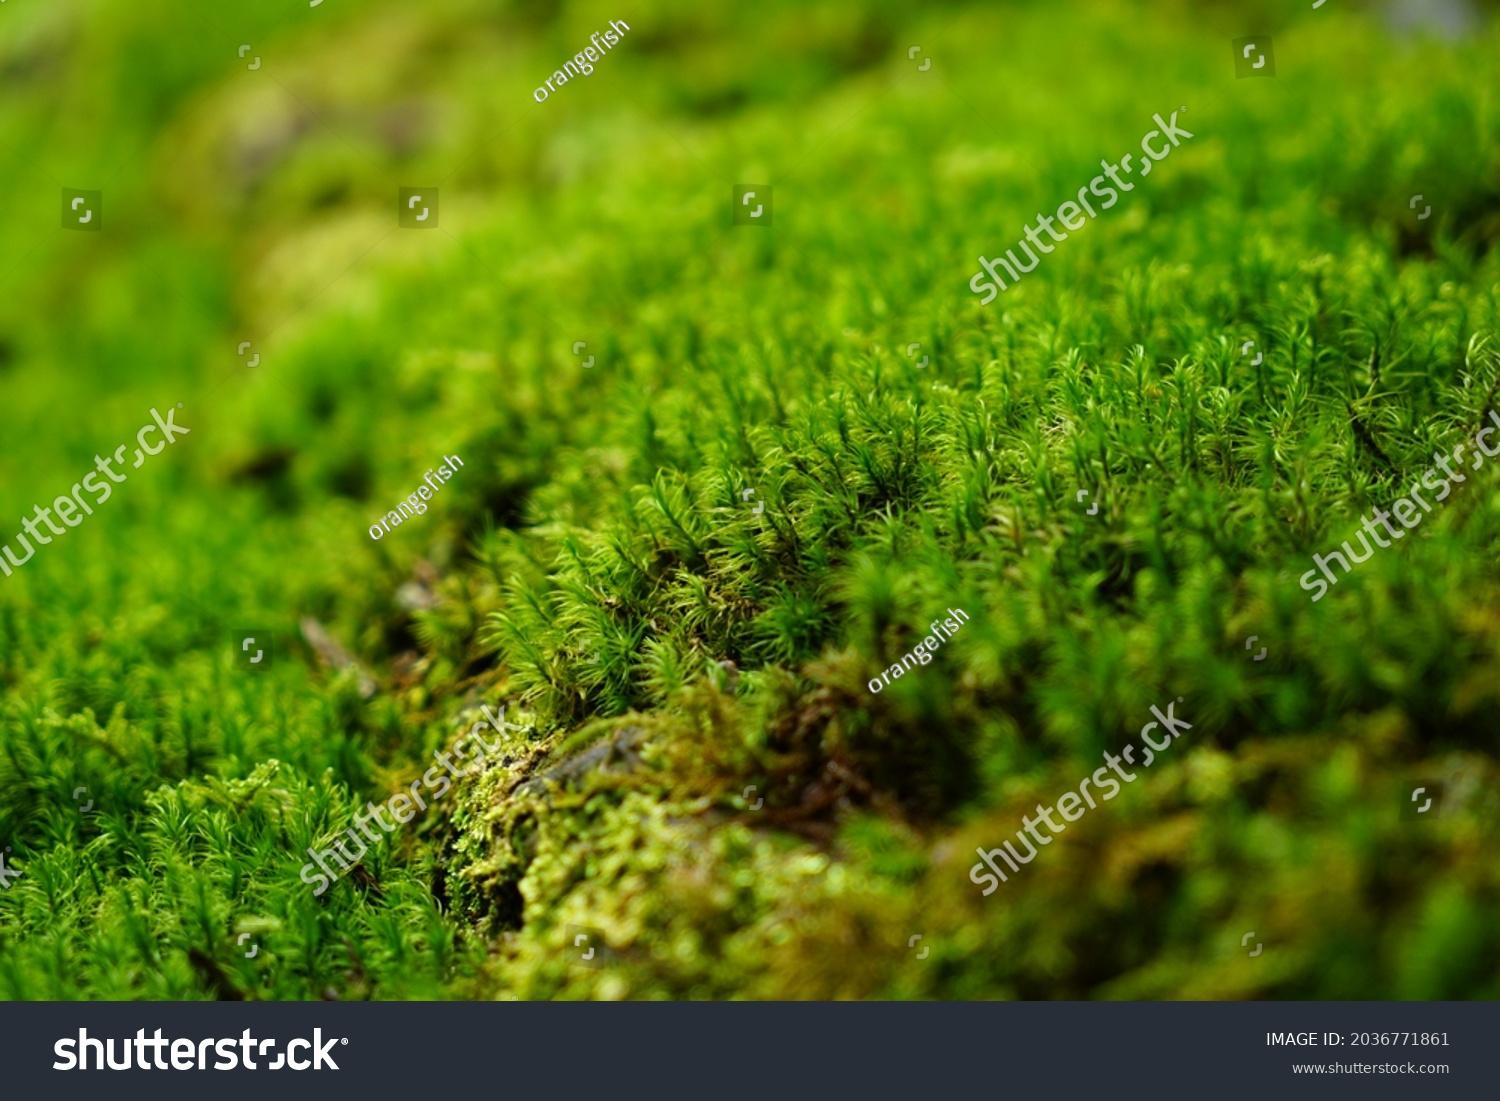 stock-photo-scientific-name-dicranum-japonicum-mitt-one-side-of-the-moss-in-the-moss-garden-2036771861.jpg